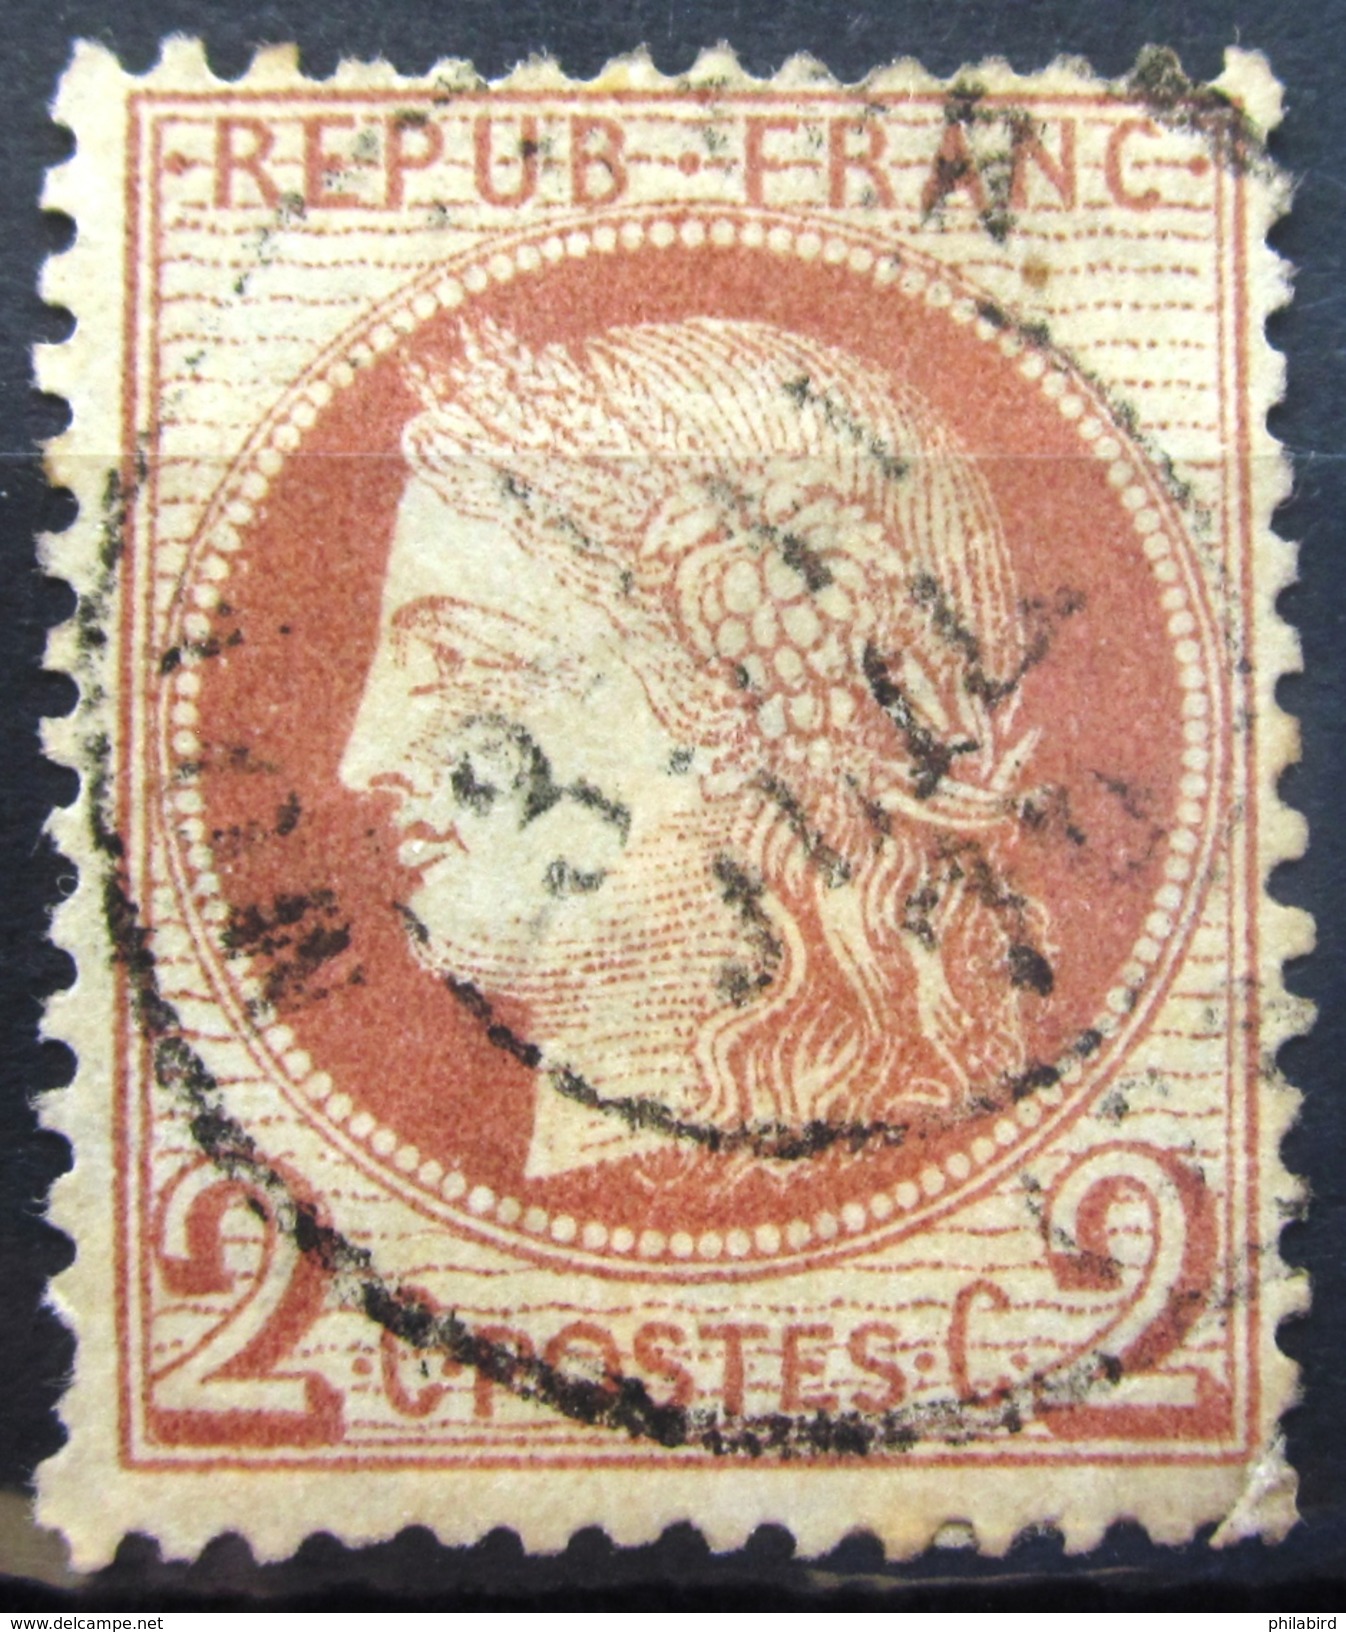 FRANCE           N° 51               OBLITERE - 1871-1875 Cérès